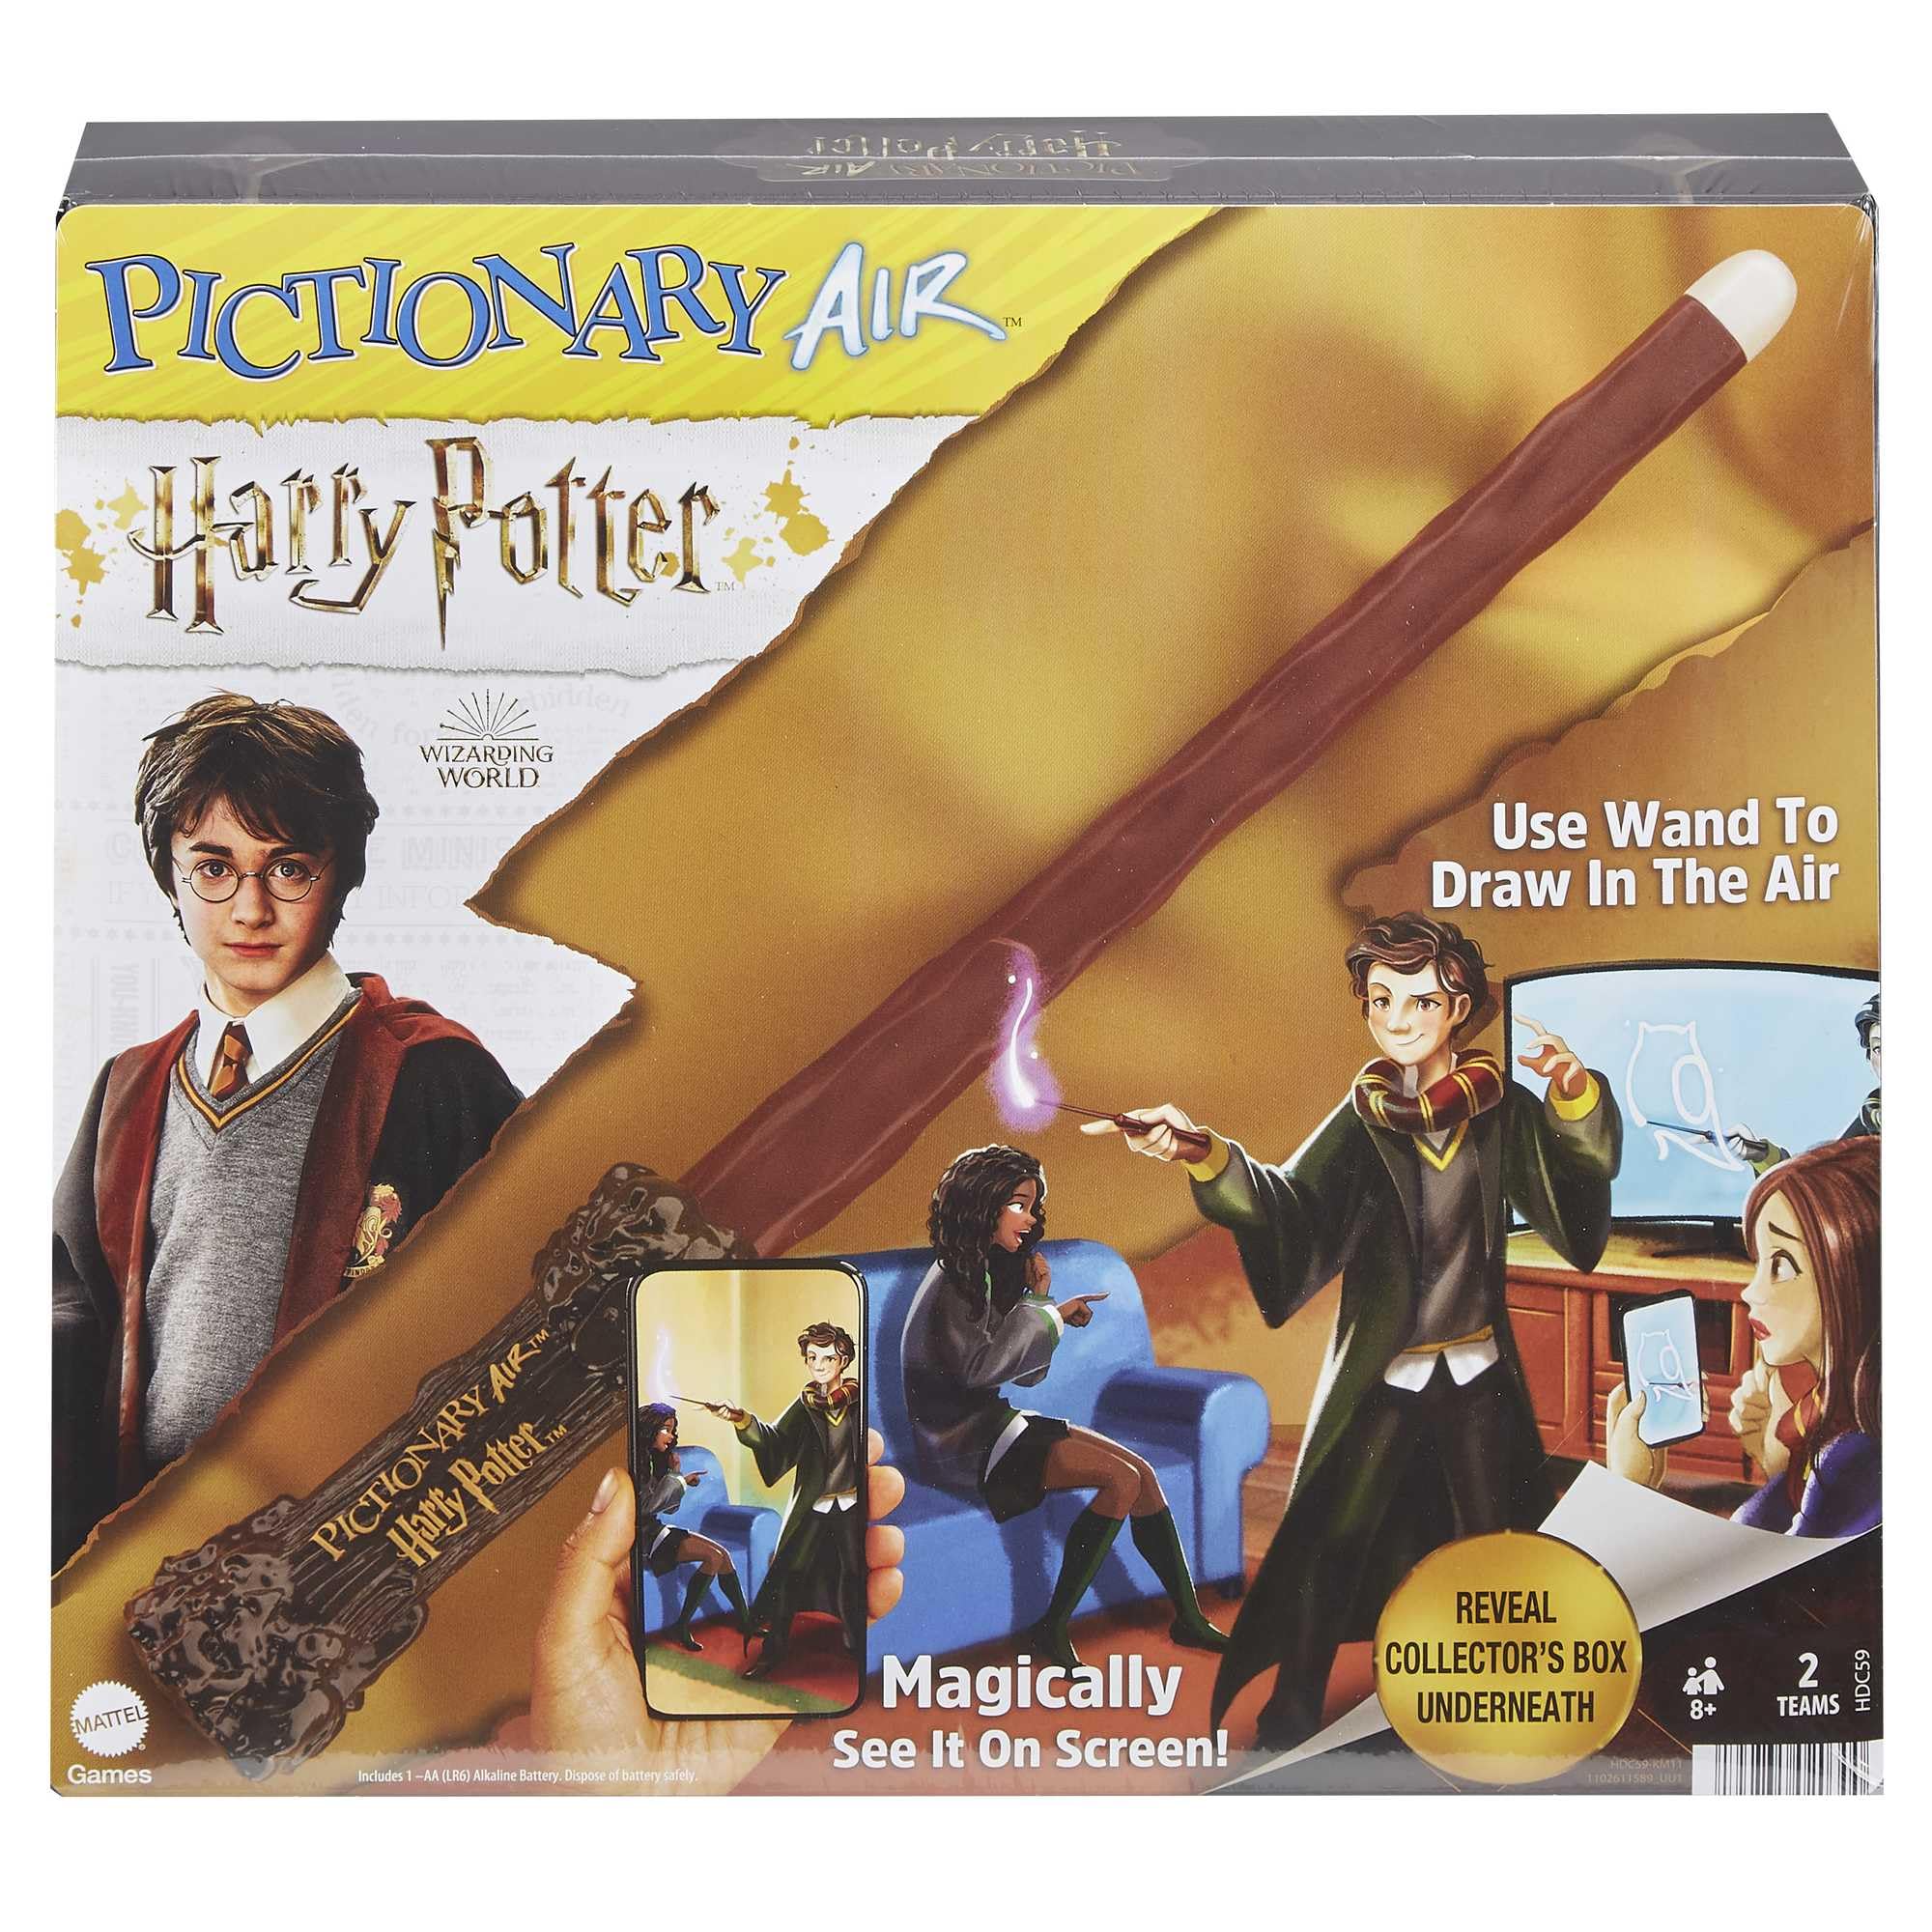 PICTIONARY AIR Harry Potter Family Drawing Game, Zauberstab, 112 doppelseitige Hinweiskarten mit Bild Bonus Hinweise (English Version)